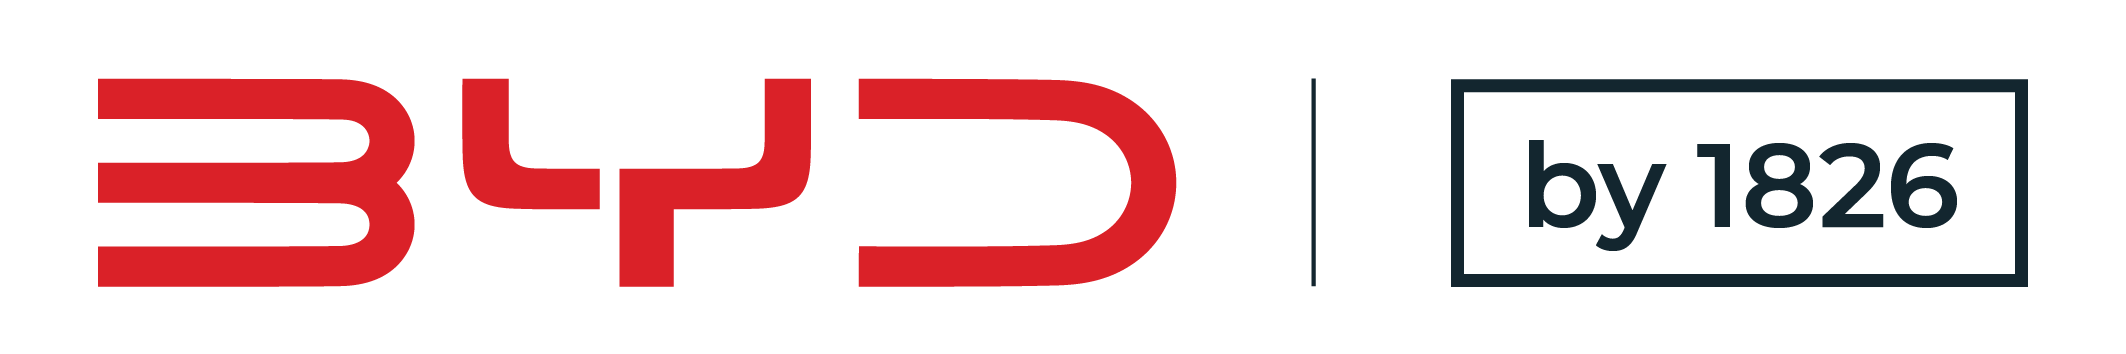 Space Tpc Pte. Ltd. company logo